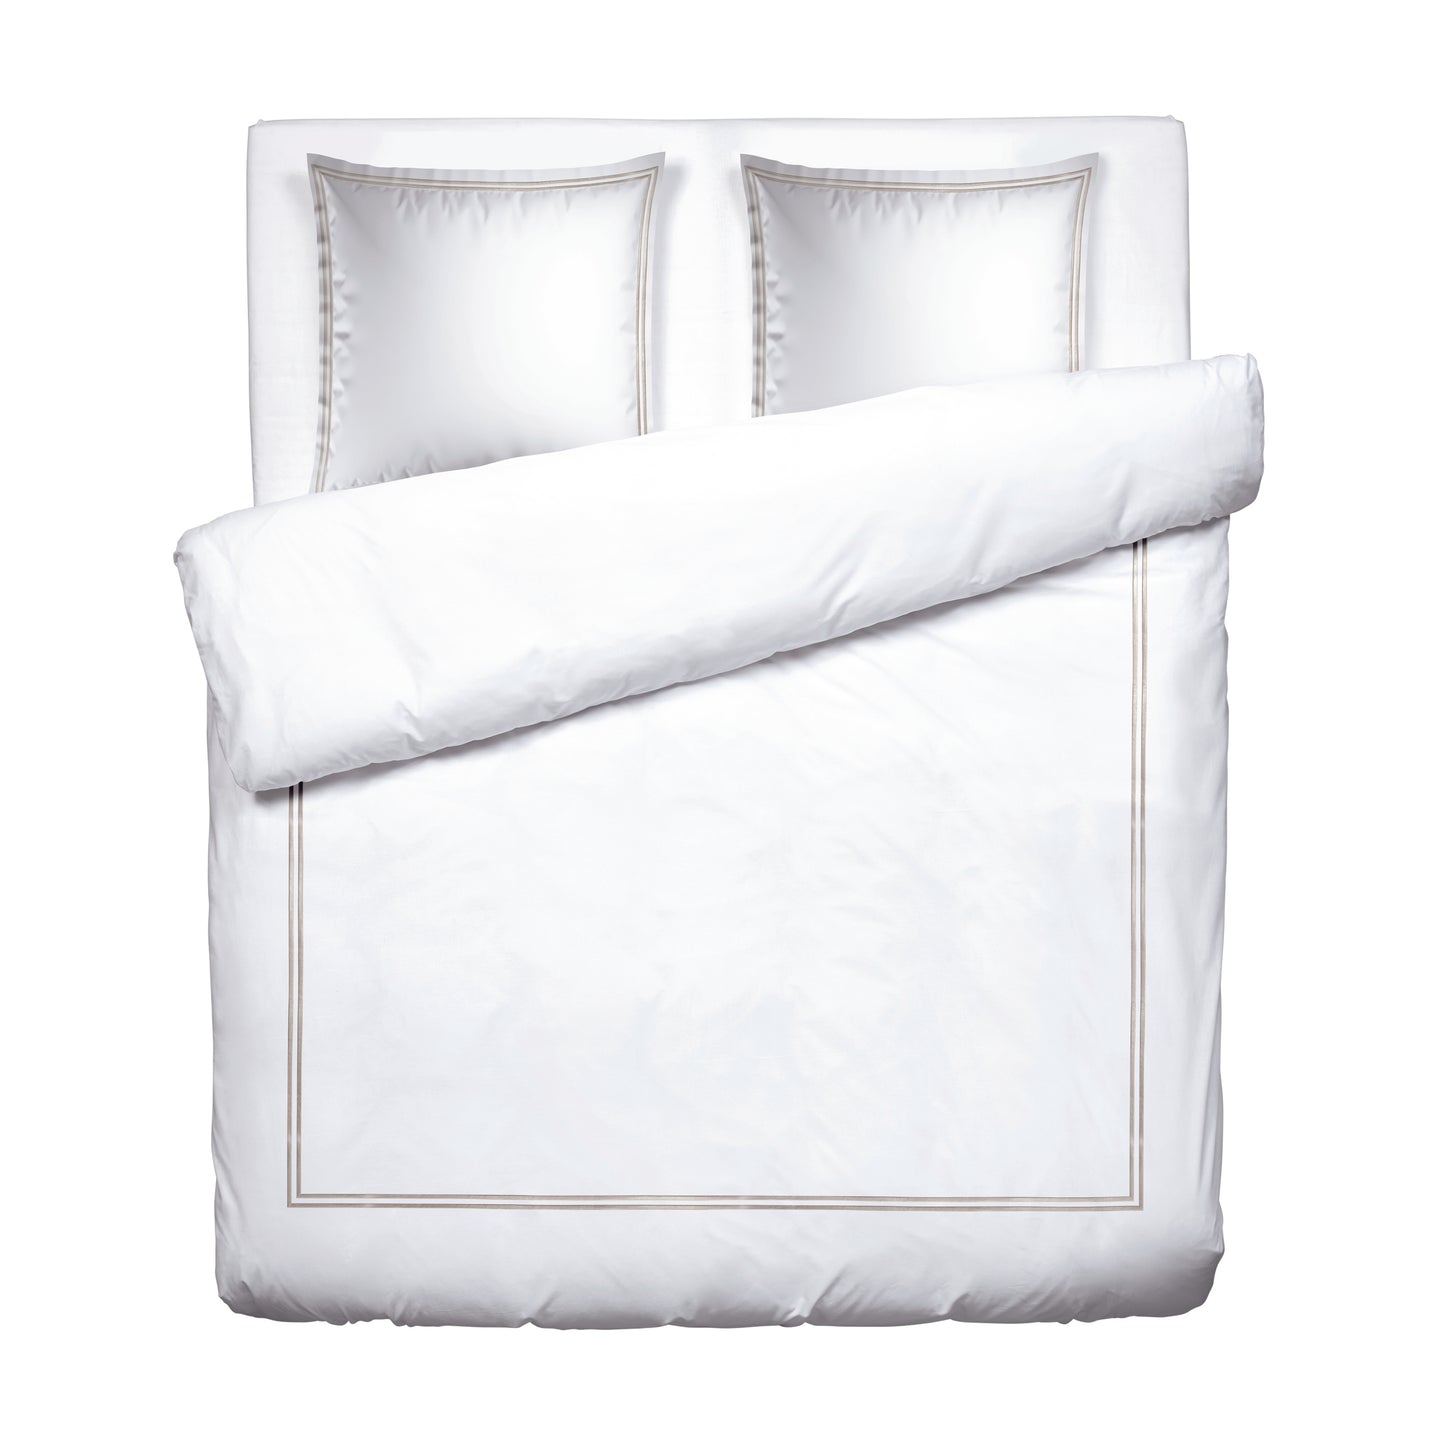 Duvet cover + pillowcase(s) cotton satin - Nice White / Taupe